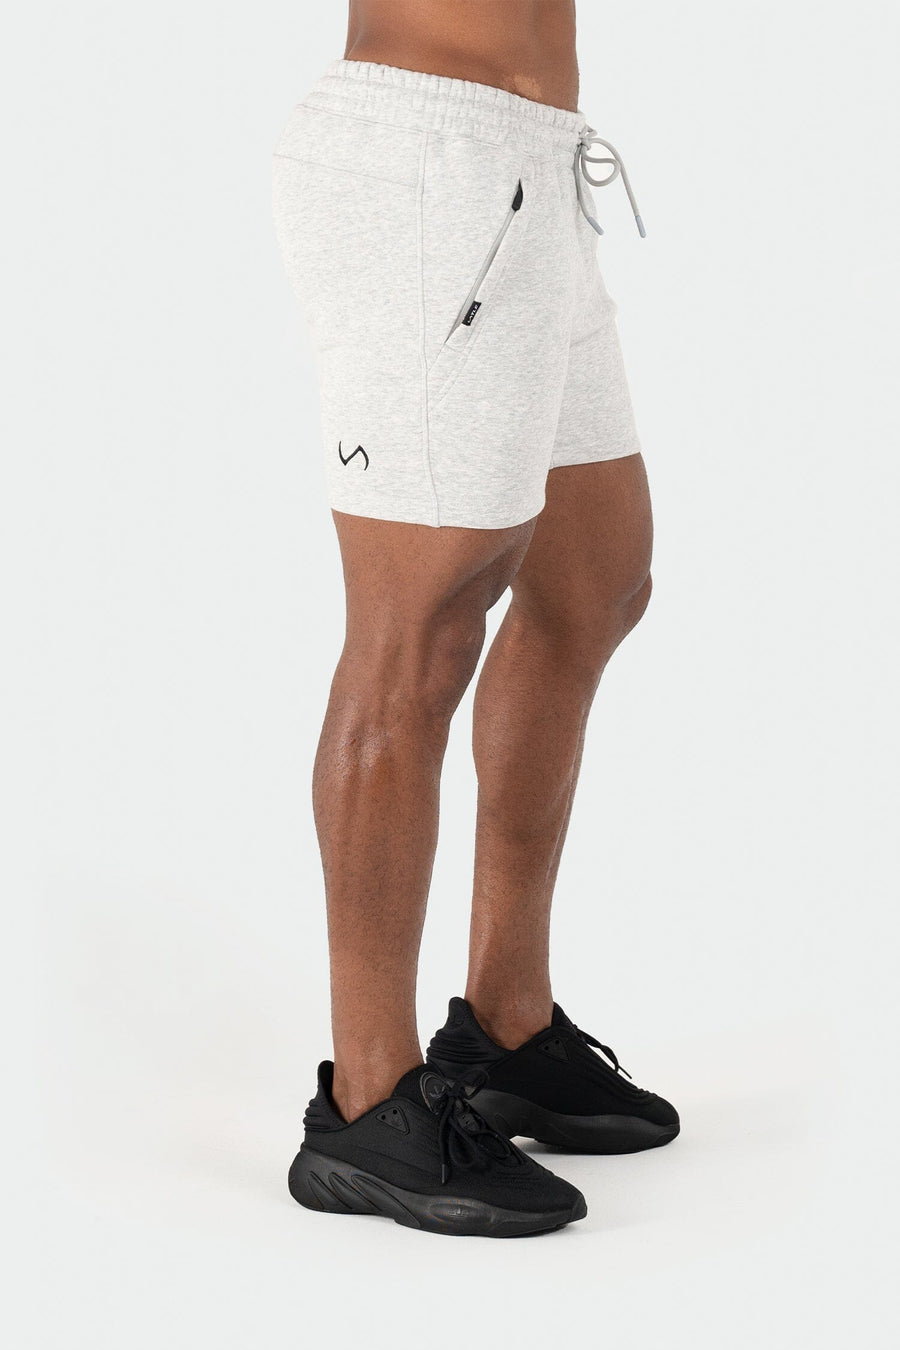 TLF Pivotal 6" Fleece Shorts – Men’s Gym Shorts - 6 Inch Inseam Men's Shorts – Gray - White - 5